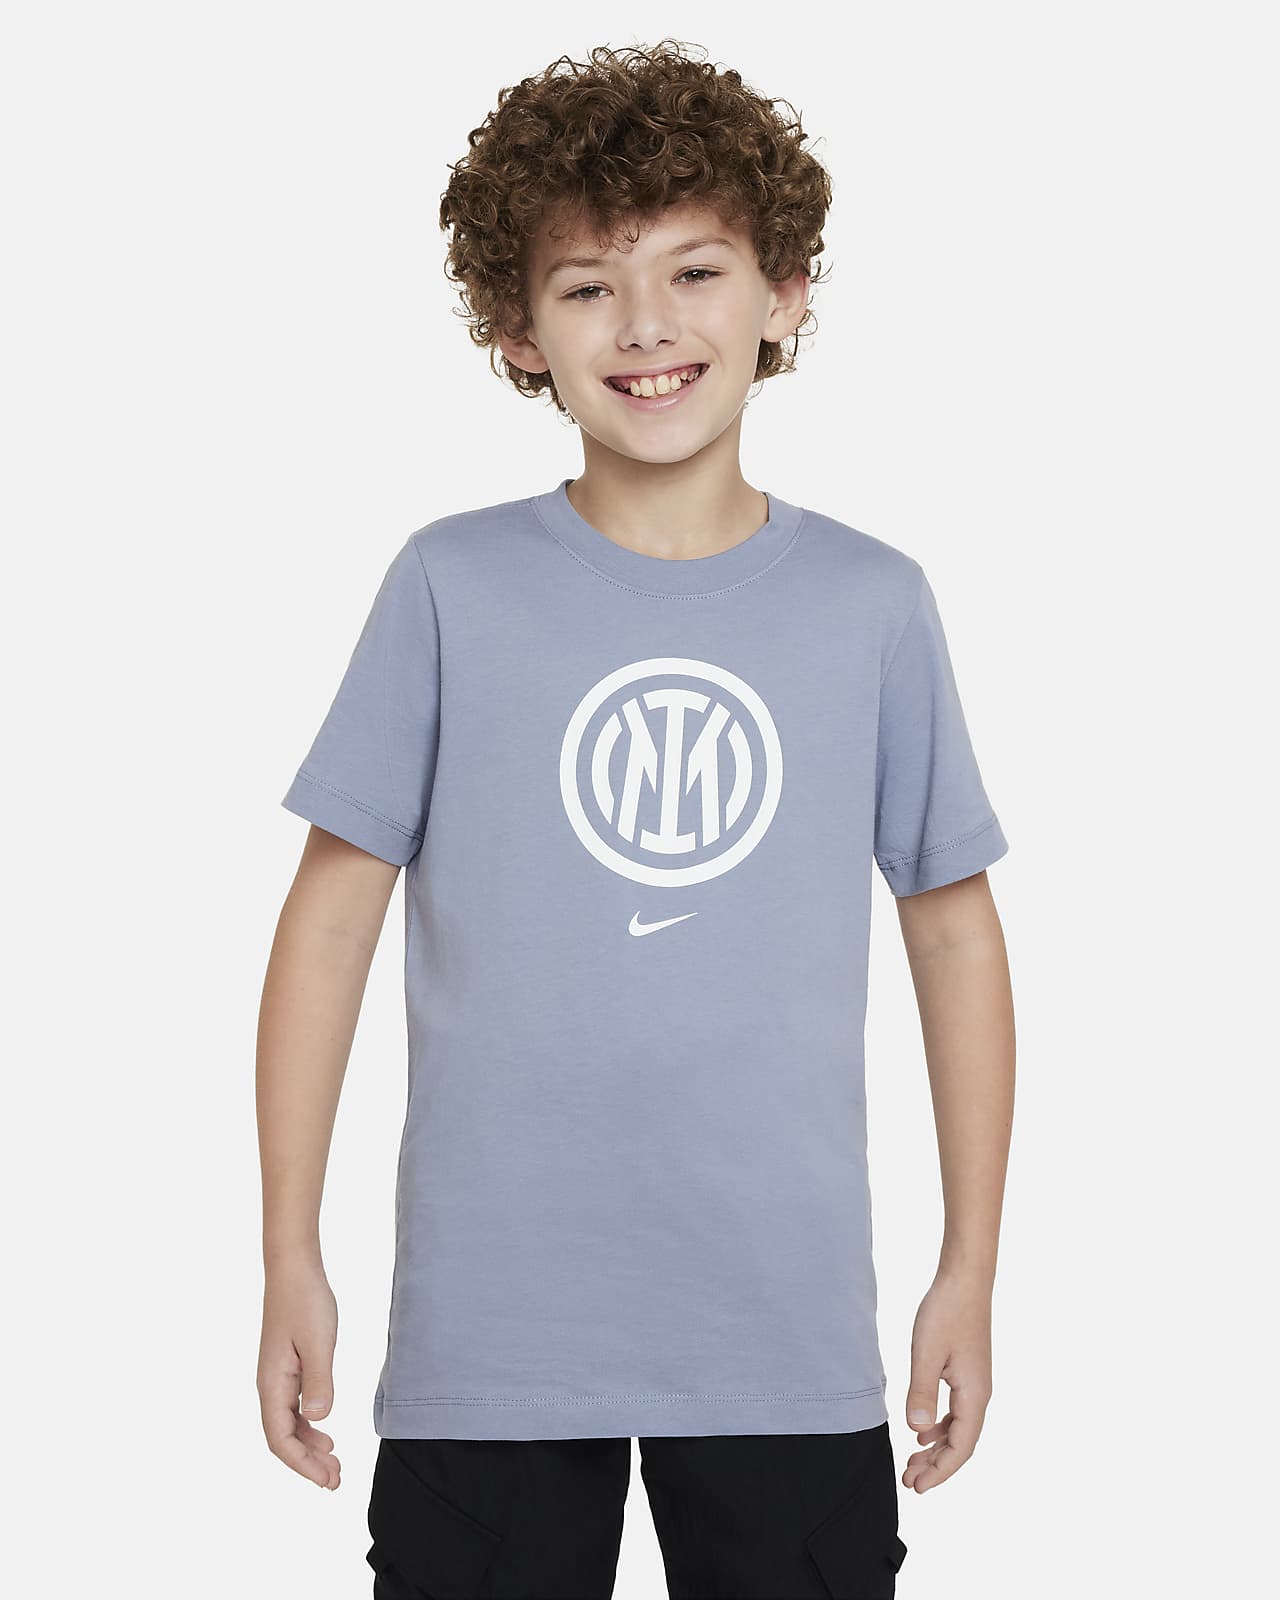 Inter de Milán Crest Camiseta Nike - Niño/a